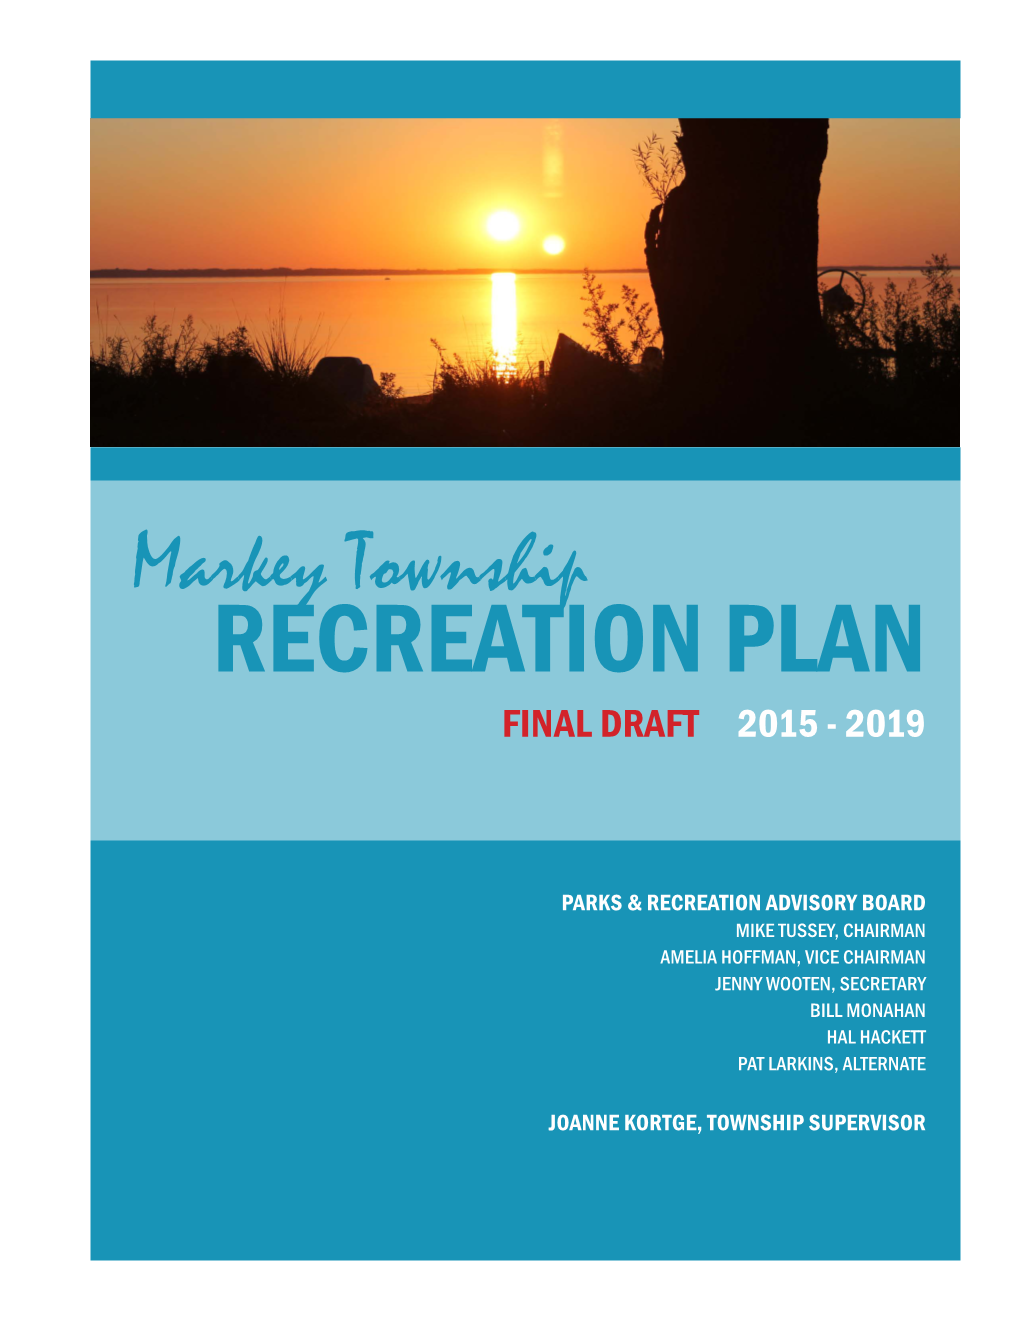 Markey Township RECREATION PLAN FINAL DRAFT 2015 - 2019